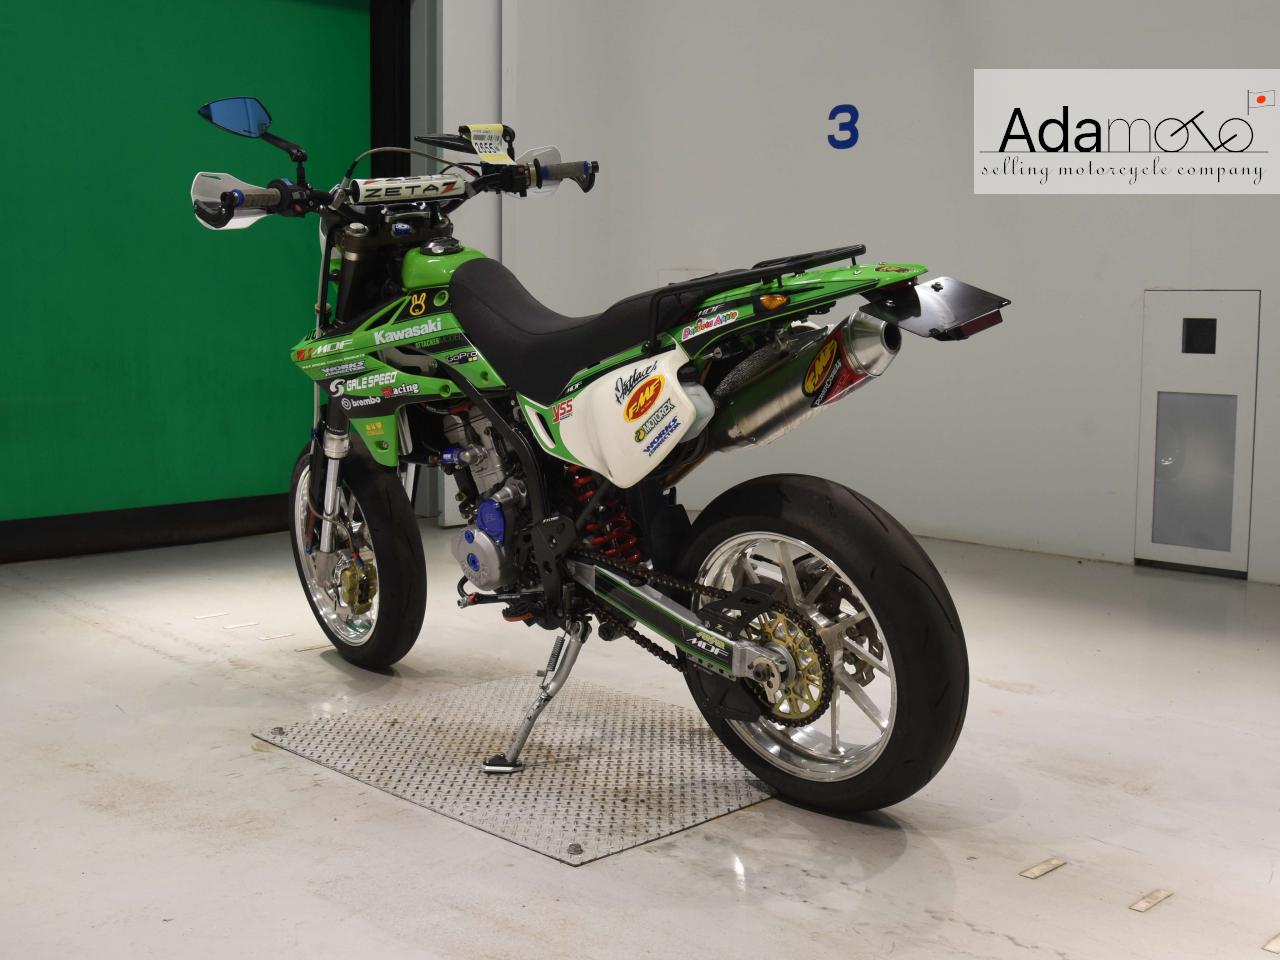 Kawasaki KLX250 - Adamoto - Motorcycles from Japan